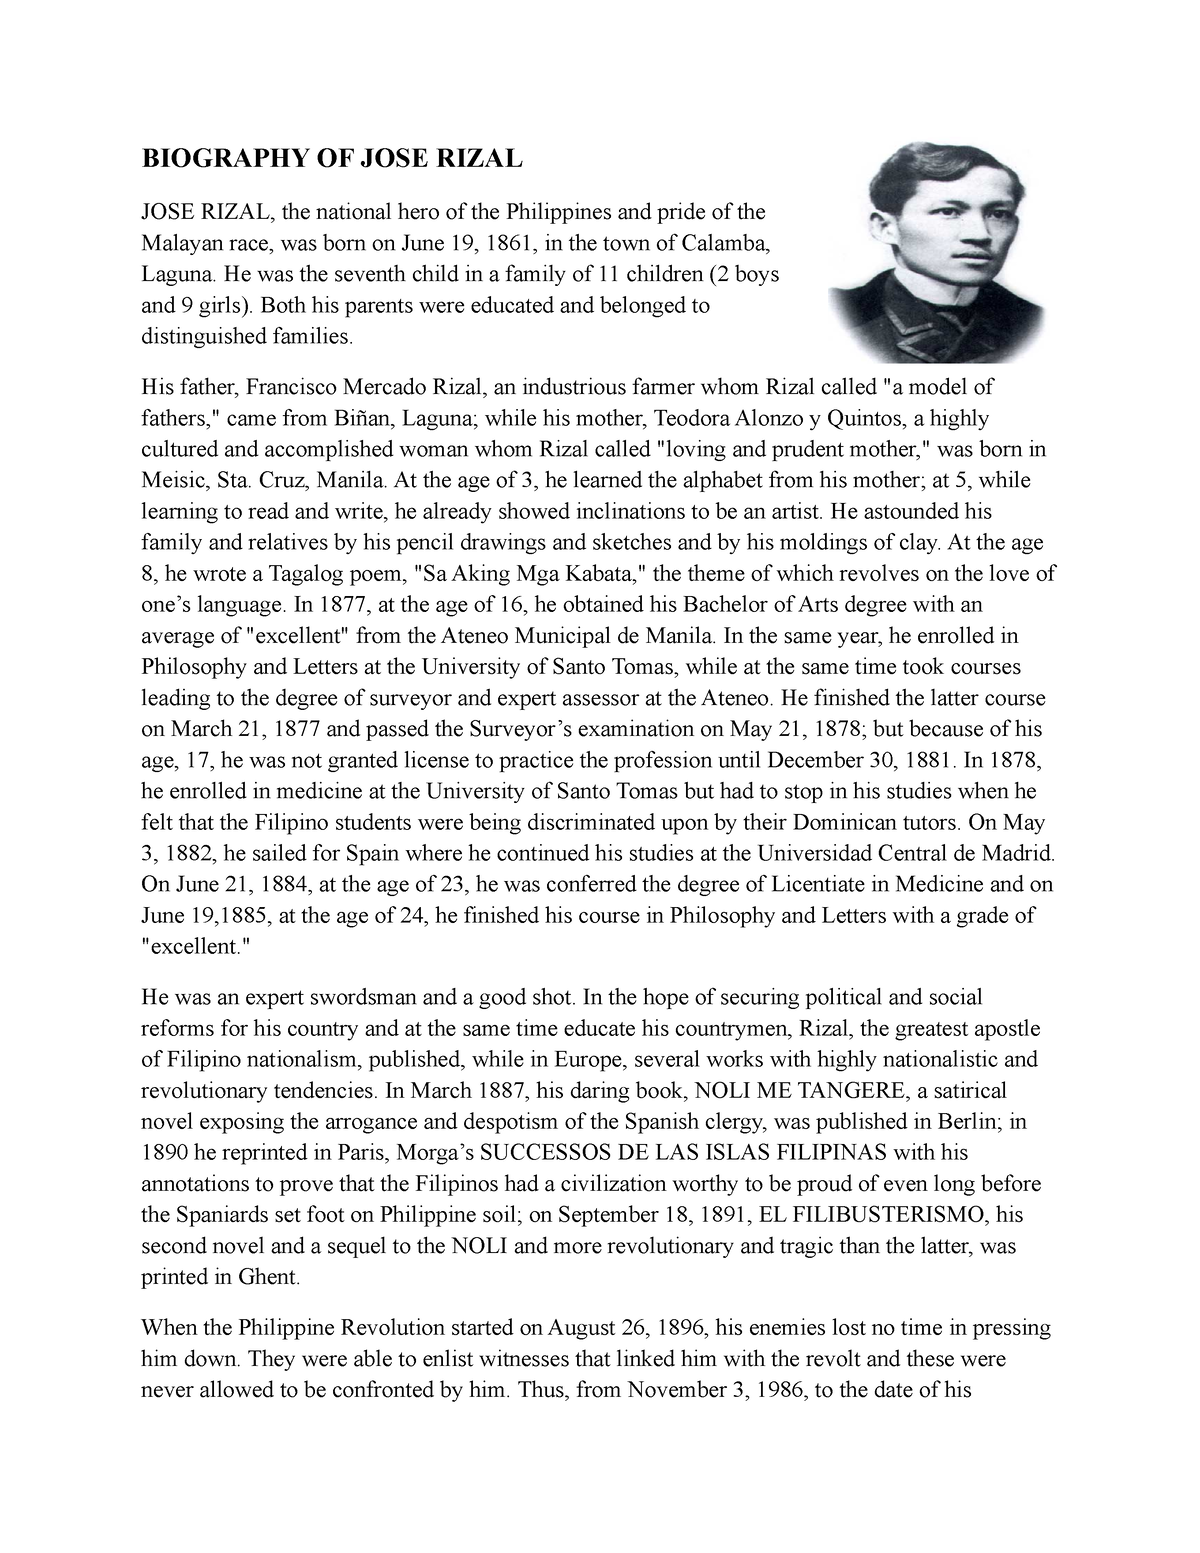 Biography Of Jose Rizal Biography Of Jose Rizal Jose Rizal The National Hero Of The 4264